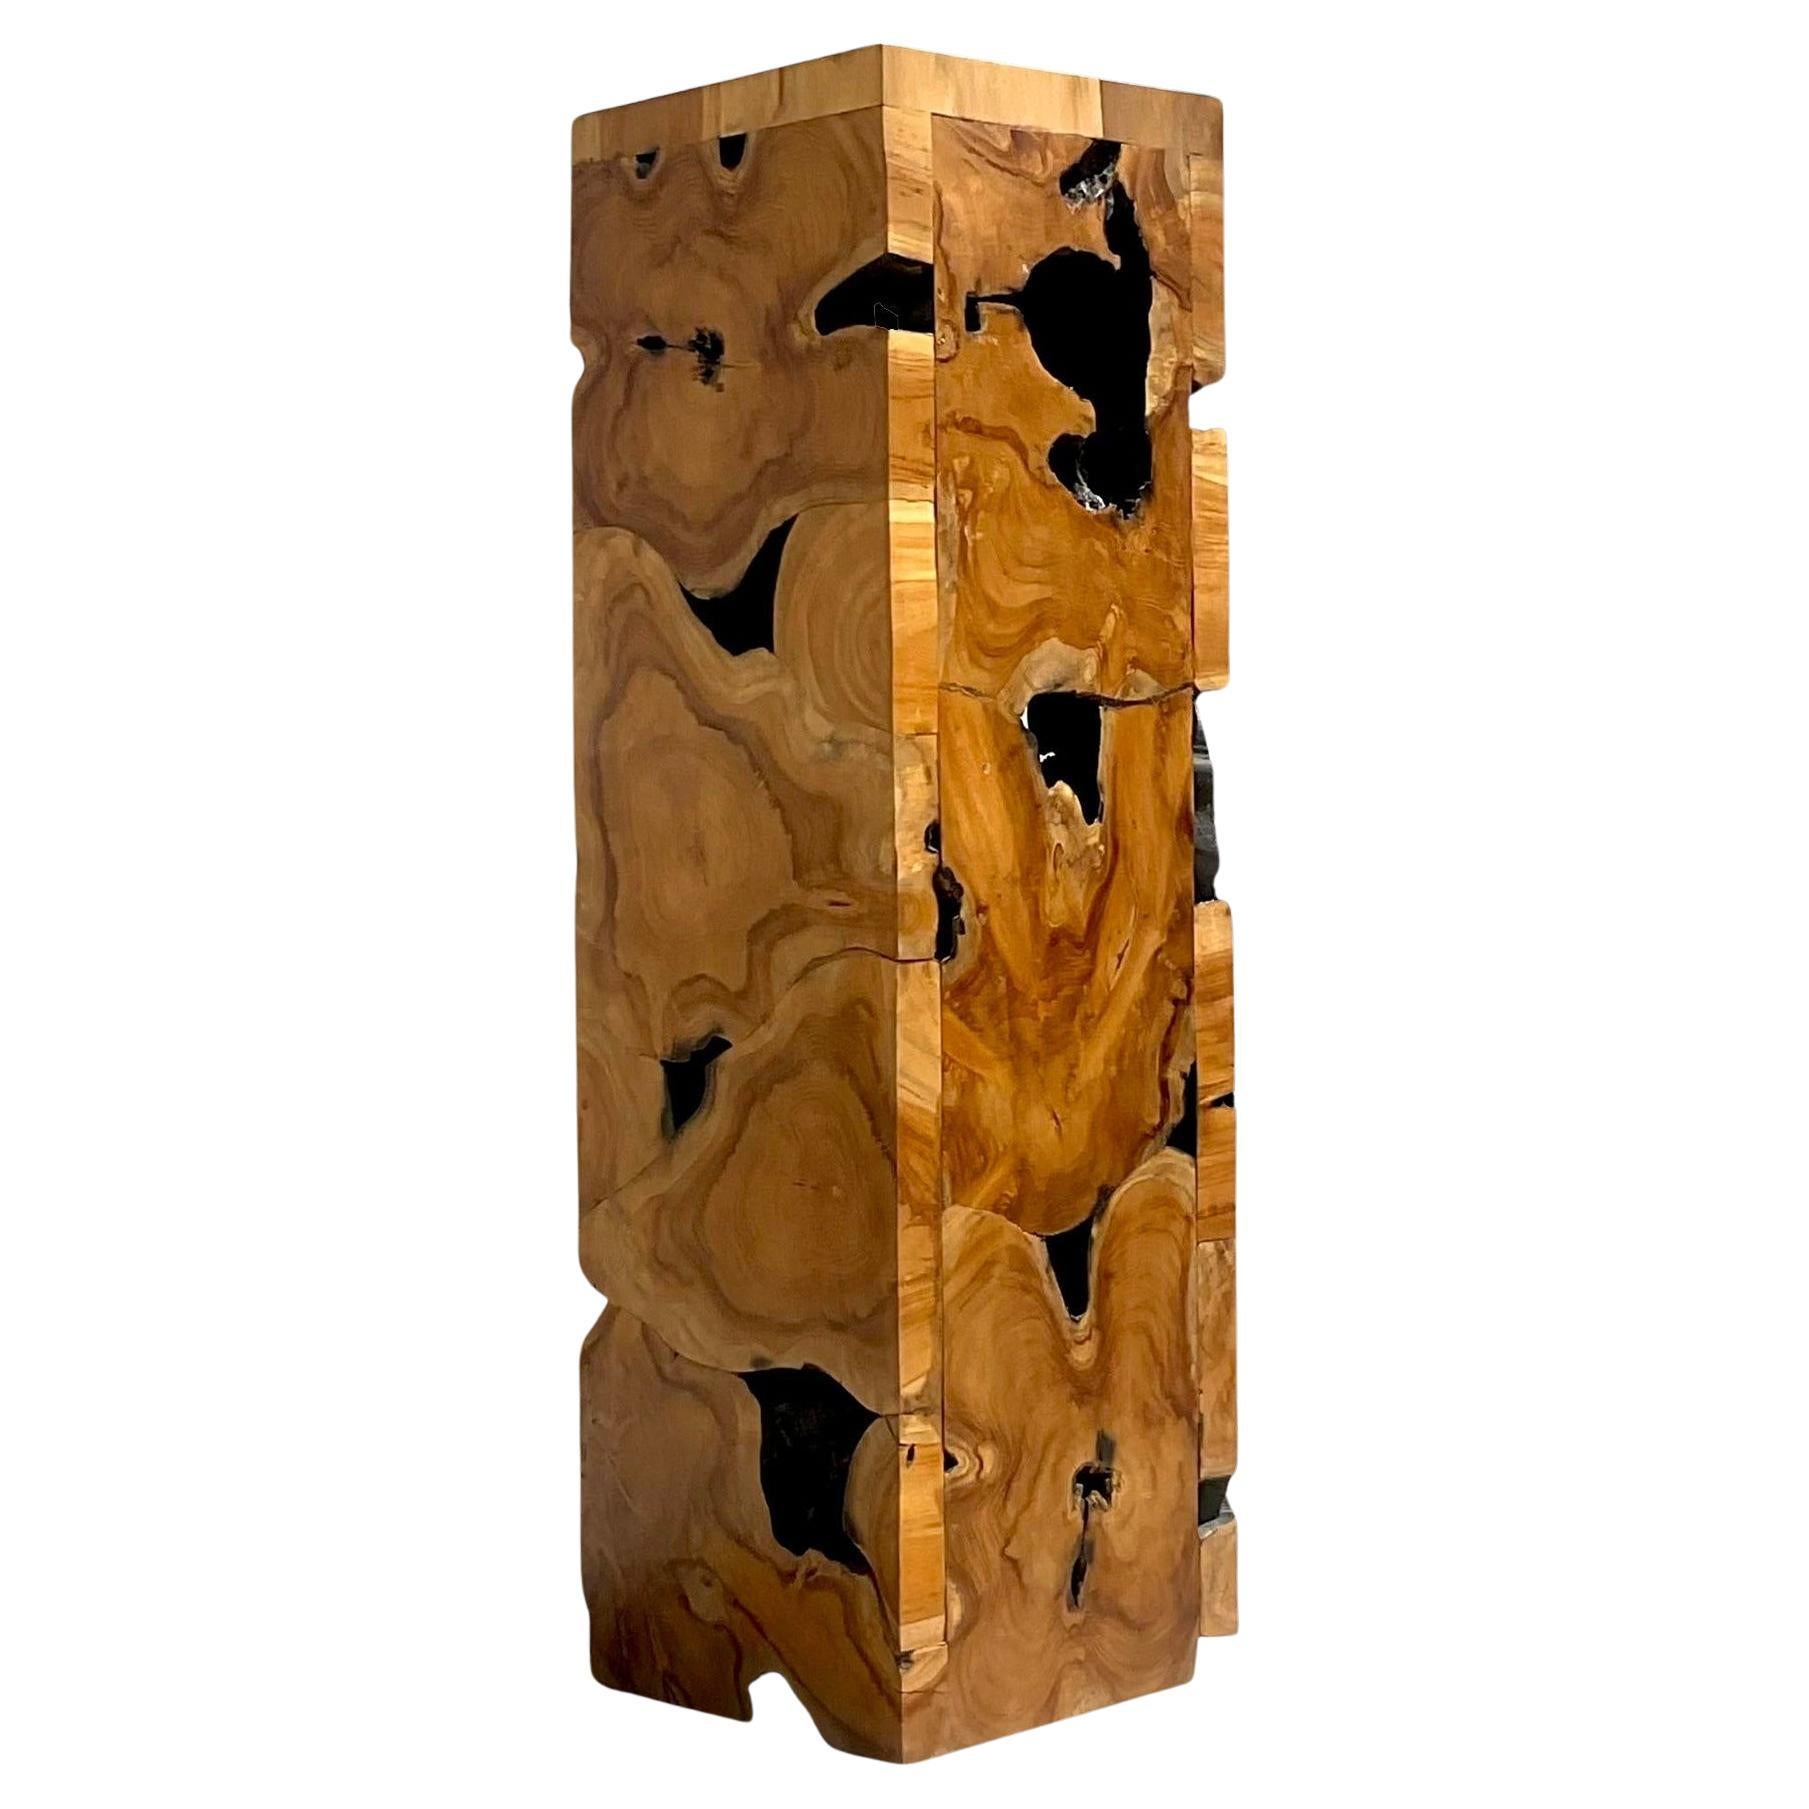 The Pedestal Wood Boho